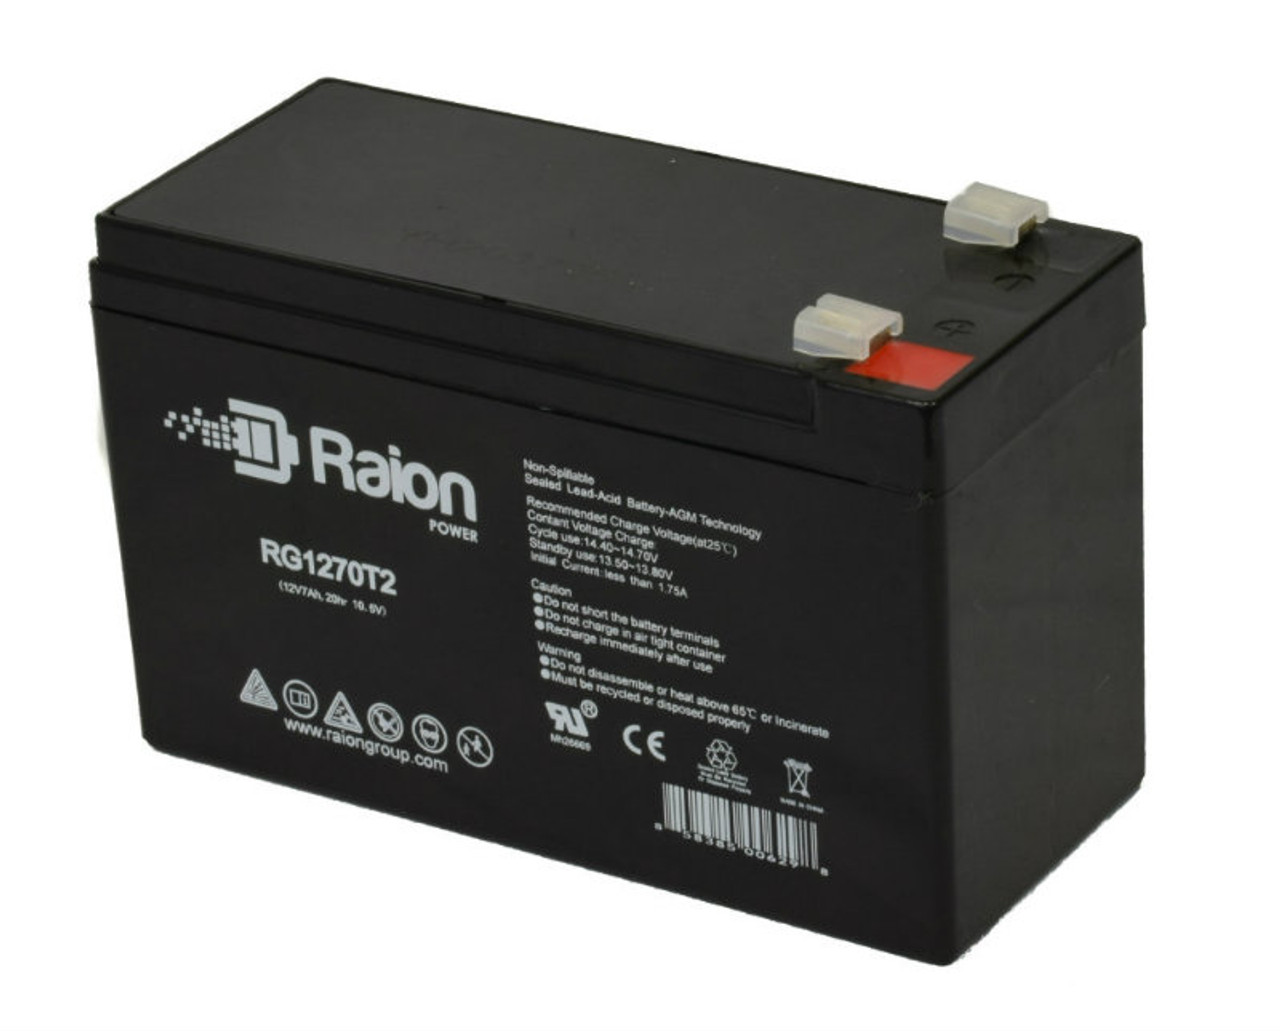 Raion Power Replacement 12V 7Ah RG1270T1 Fire Alarm Battery for ADI 4120EC